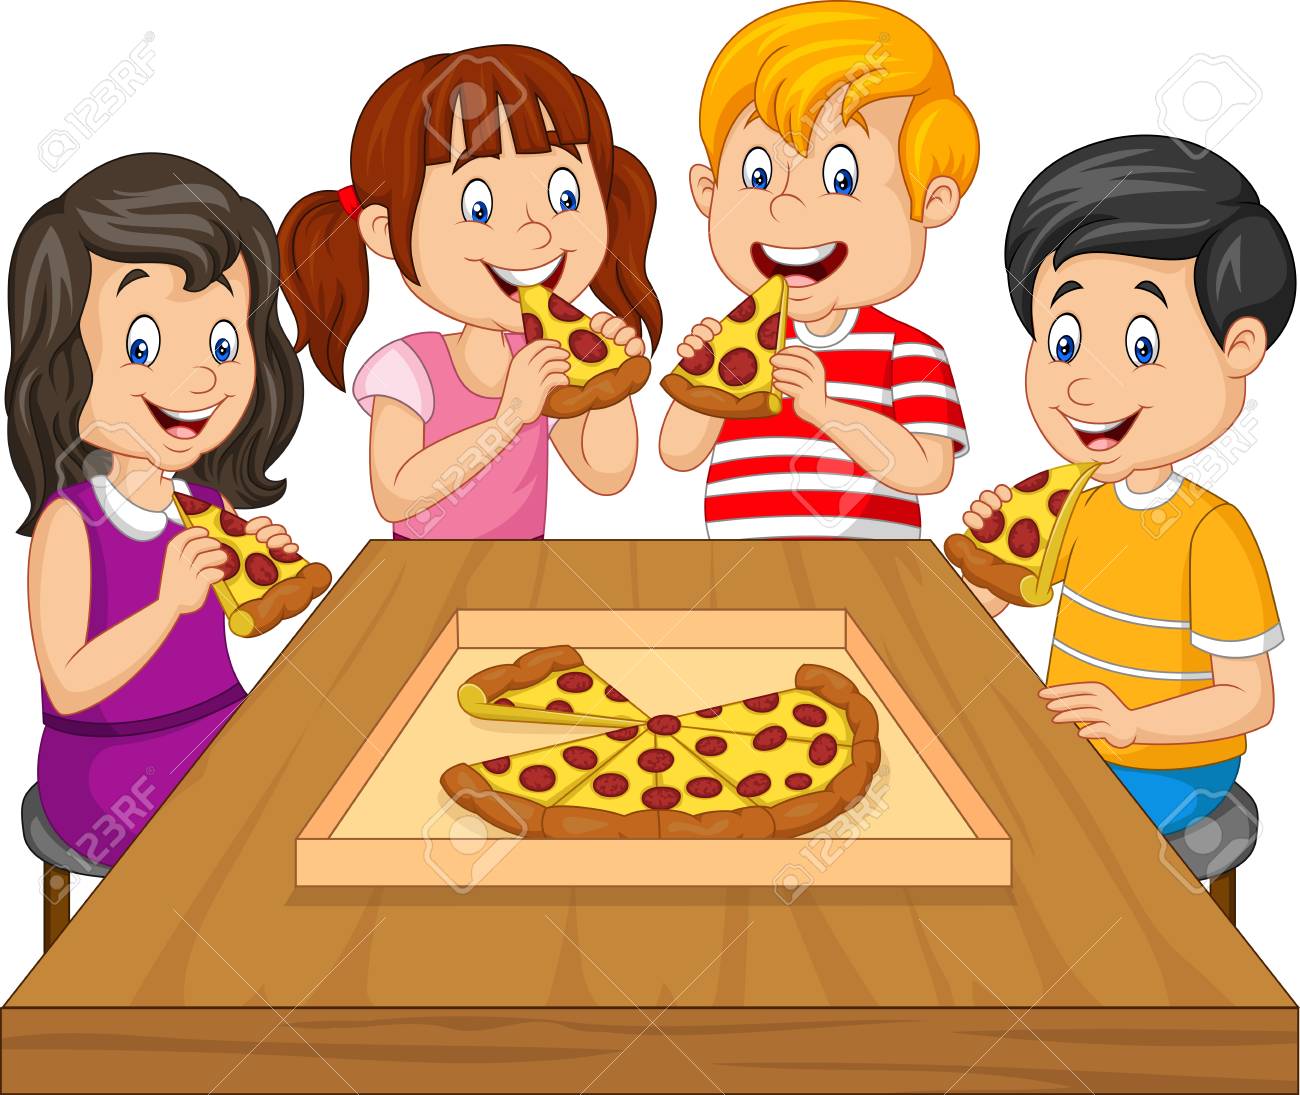 Cartoon kids eating pizza together.